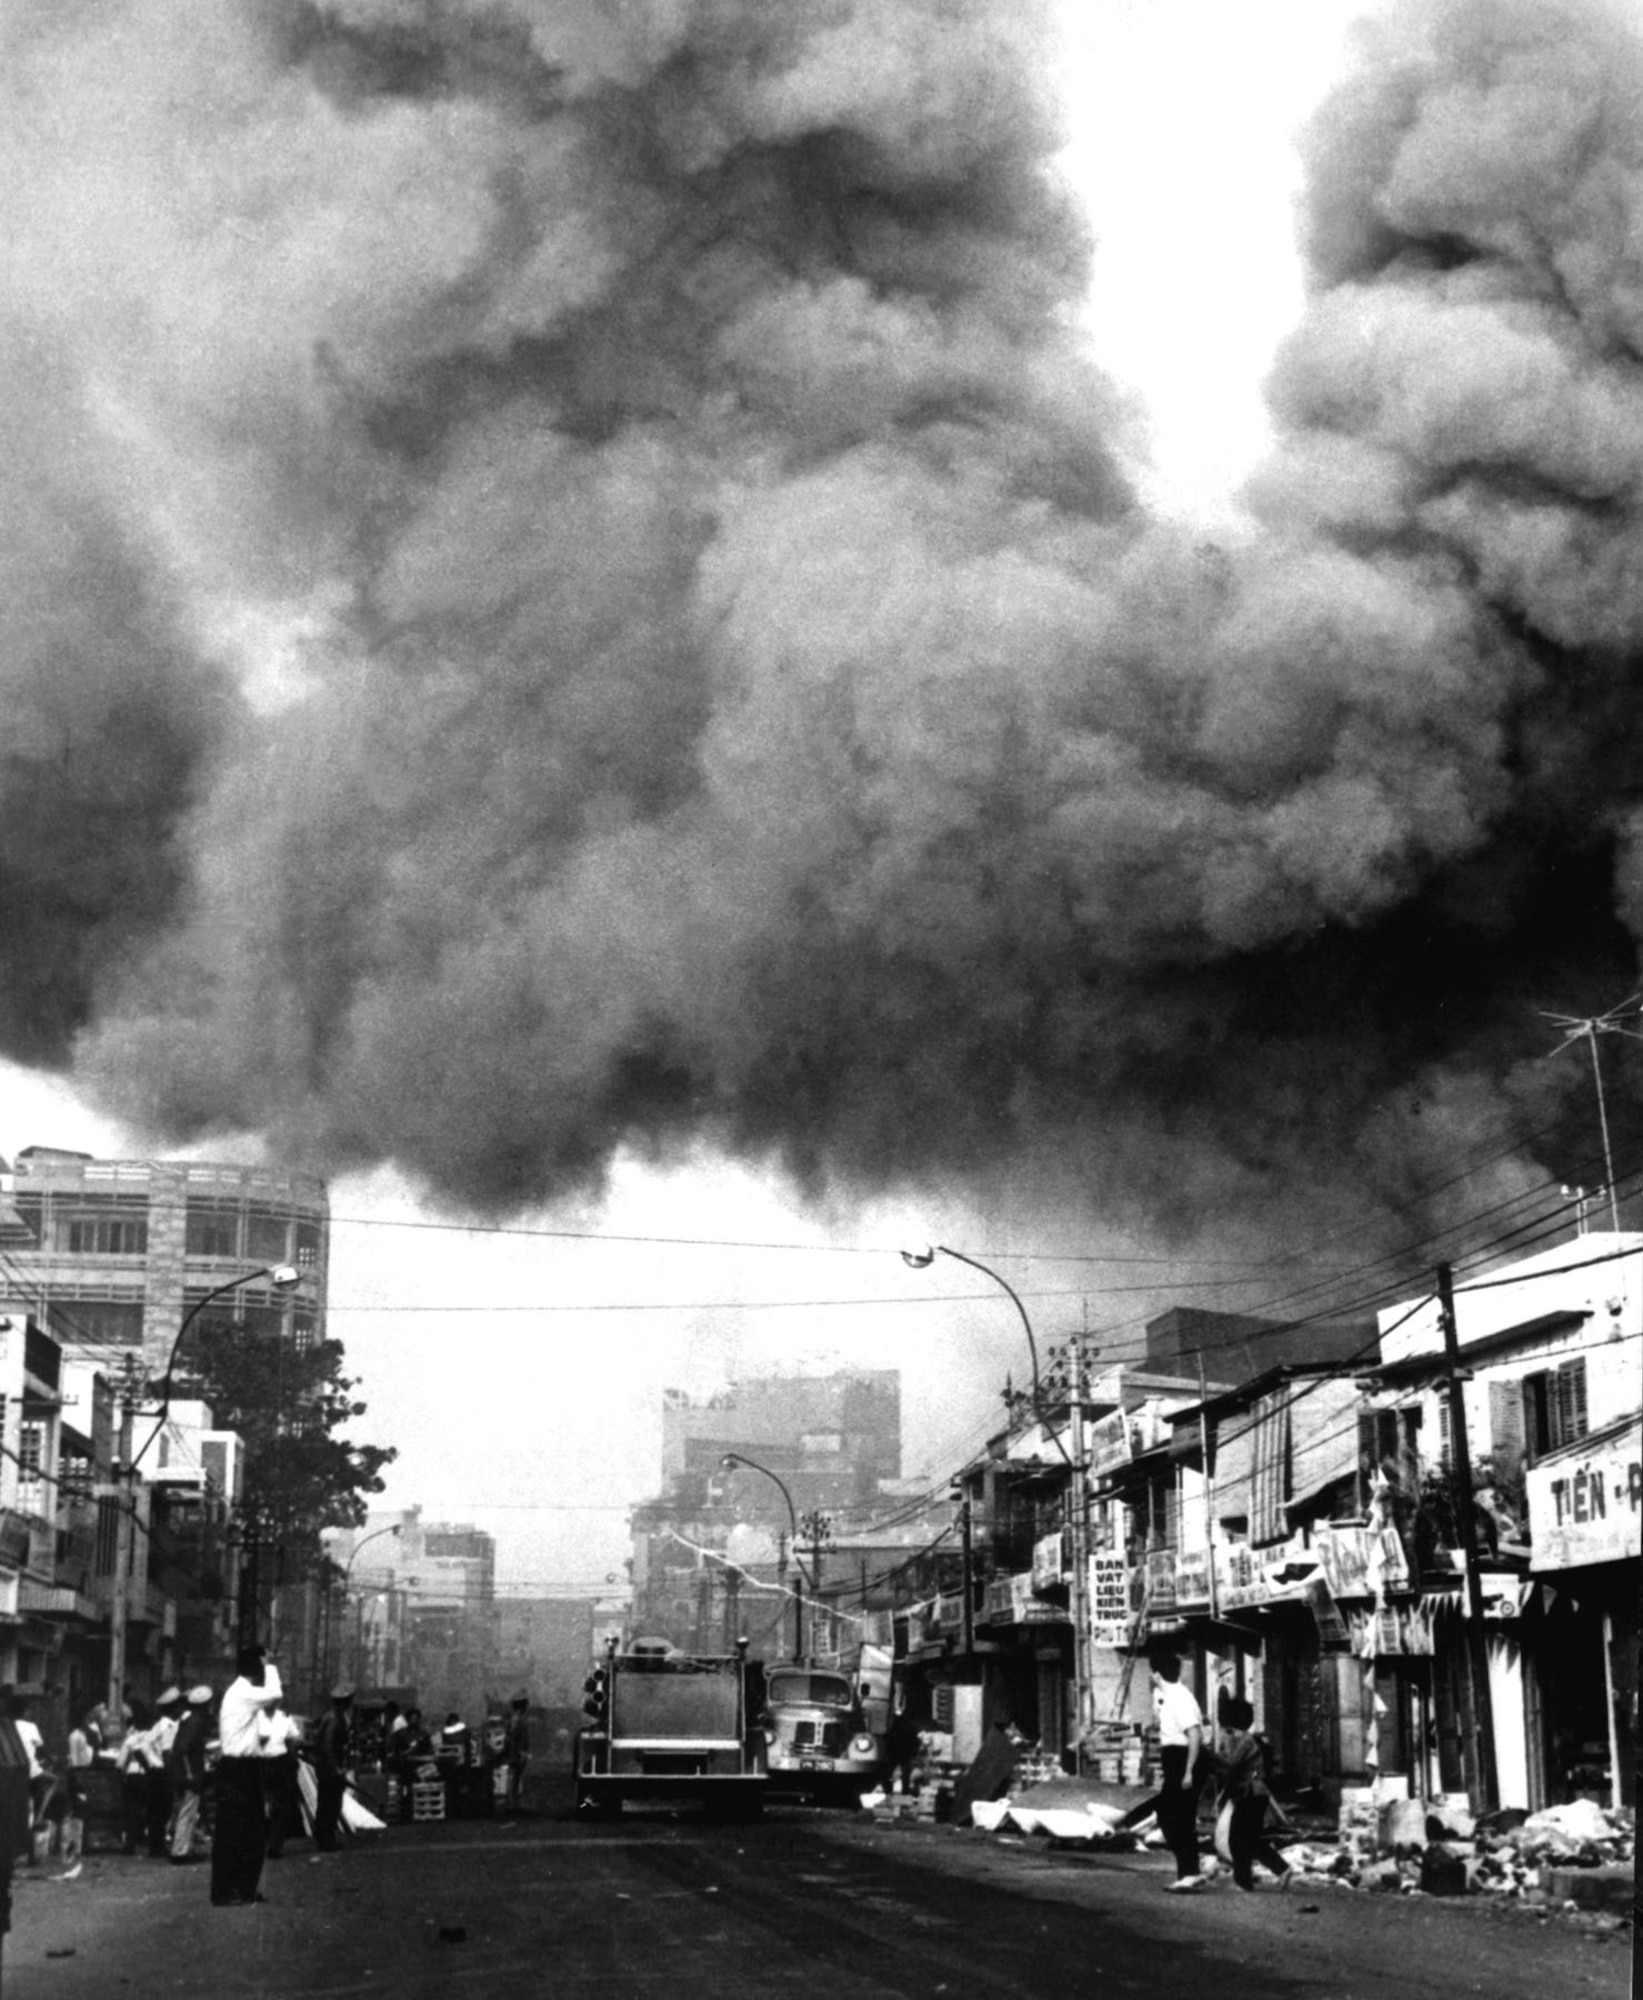 Saigon was a communist target during Tet. (U.S. Air Force photo)